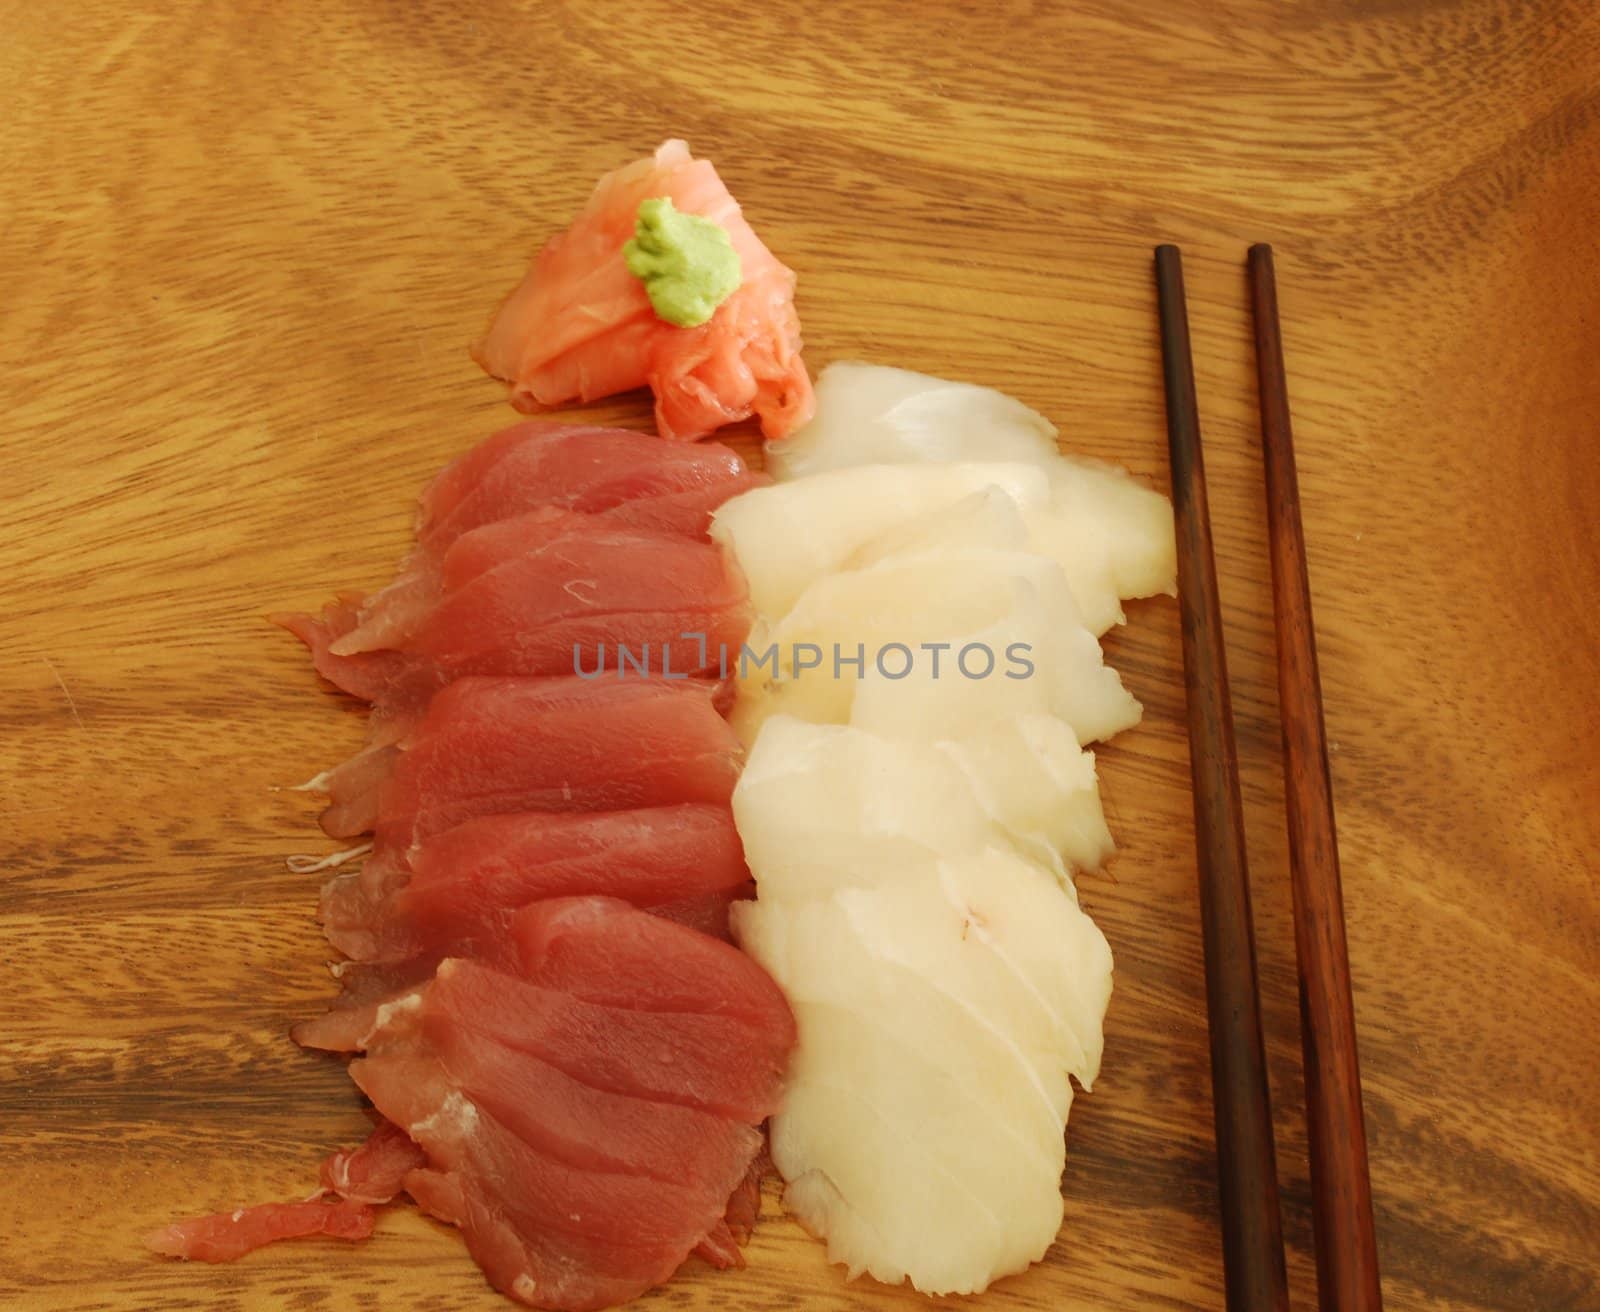 sushi meal with sashimi (tuna and bass) and chopsticks